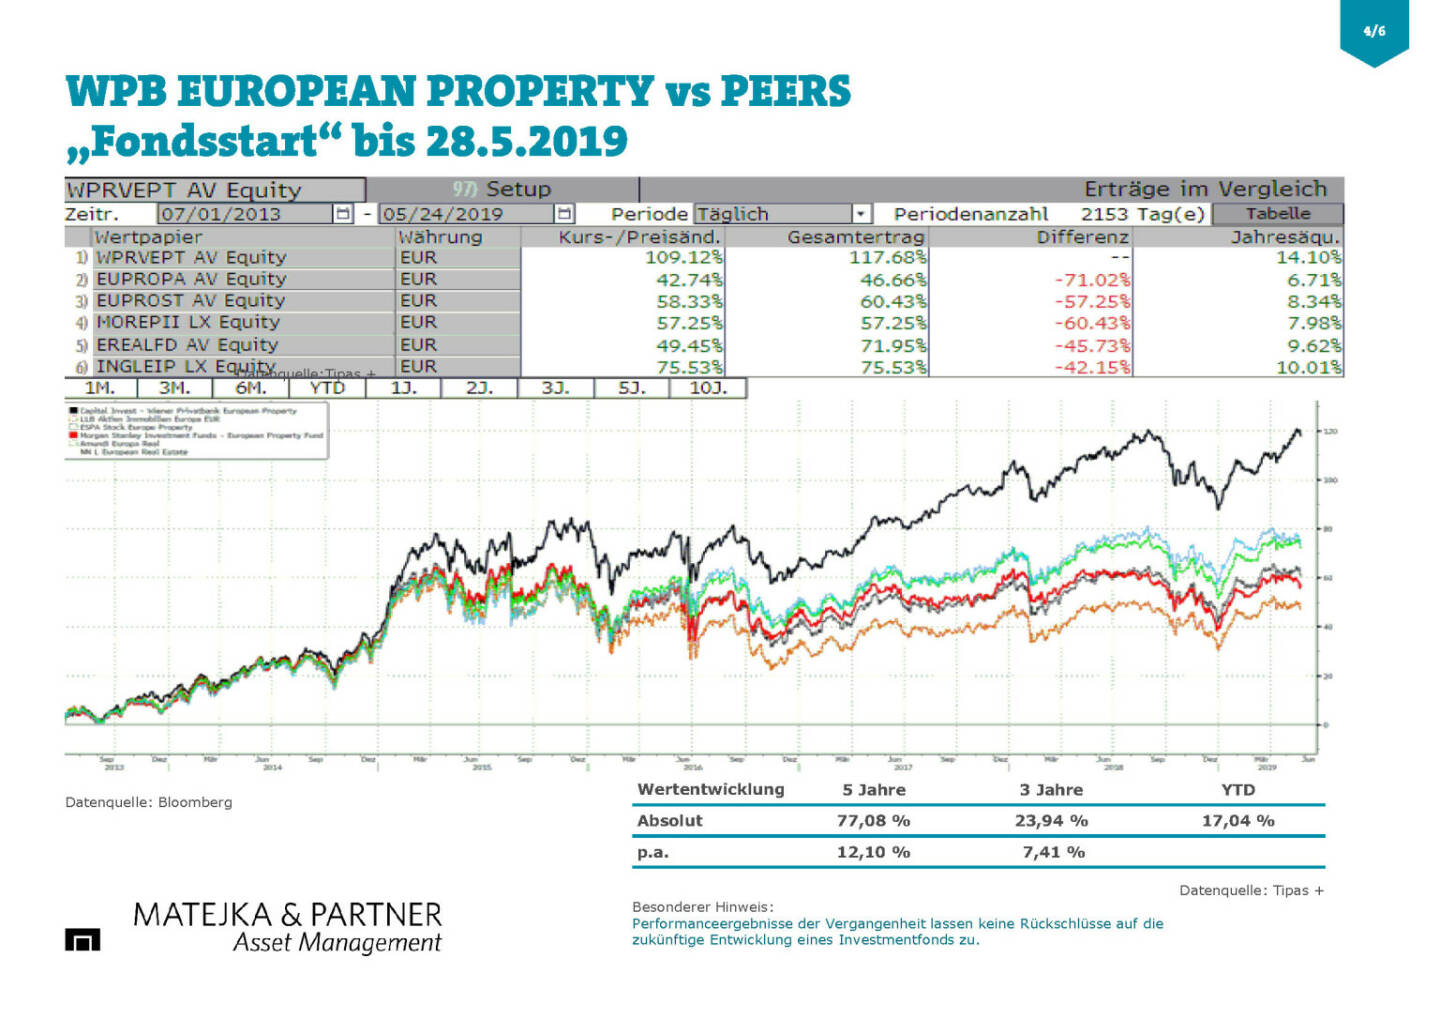 Matejka & Partner - WPB European Property vs. Peers